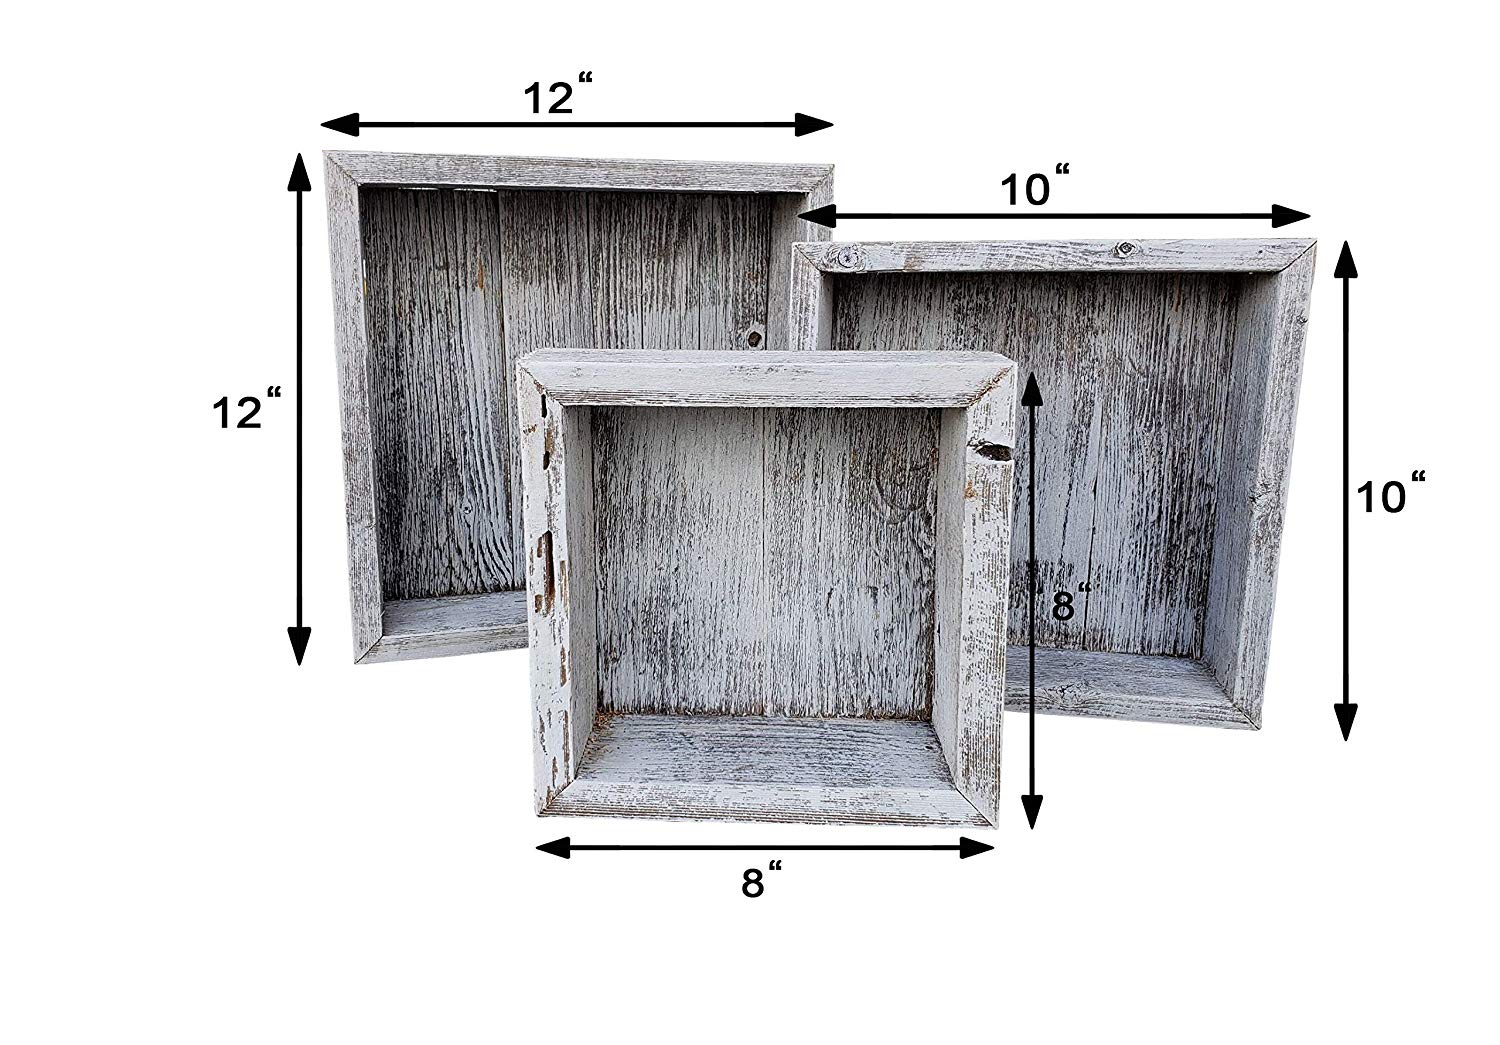 Wood Shadow-Box-Style Shelf – MyGift